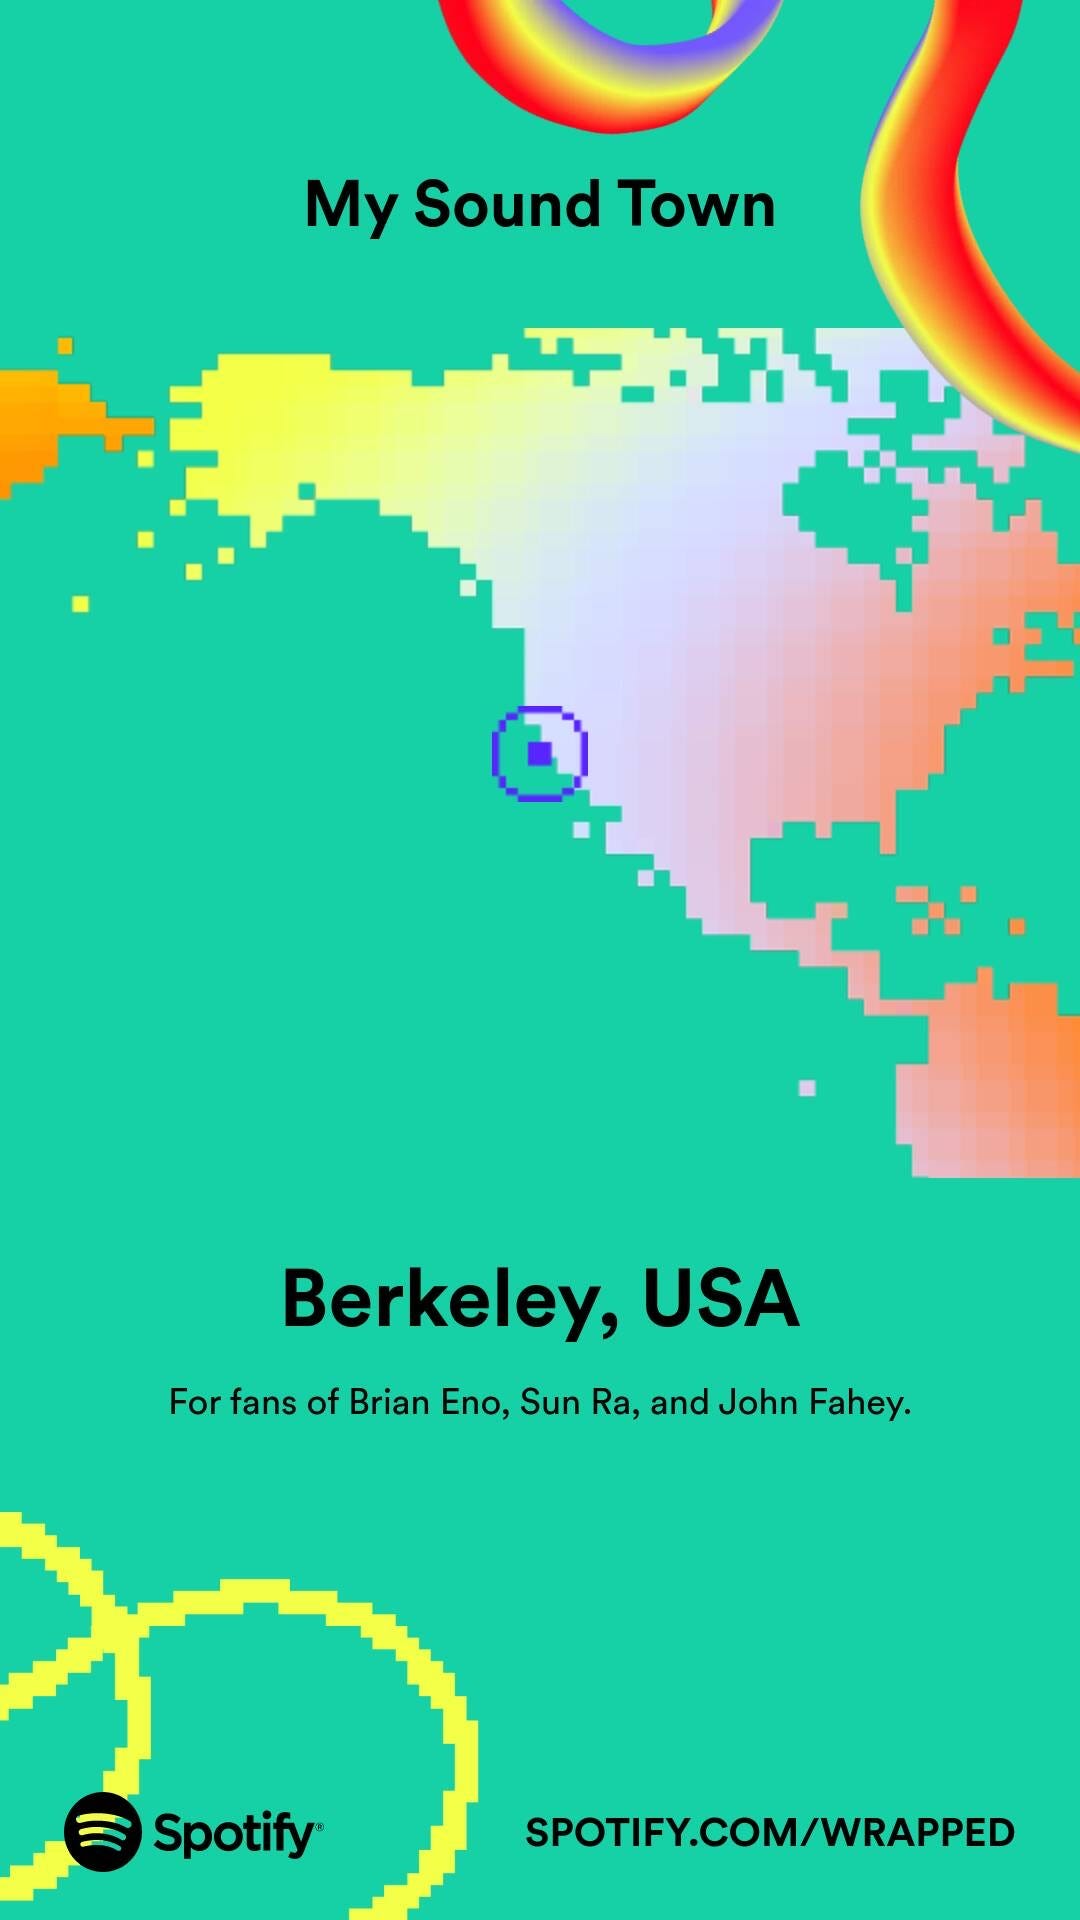 My Sound Town according to Spotify was Berkeley, California